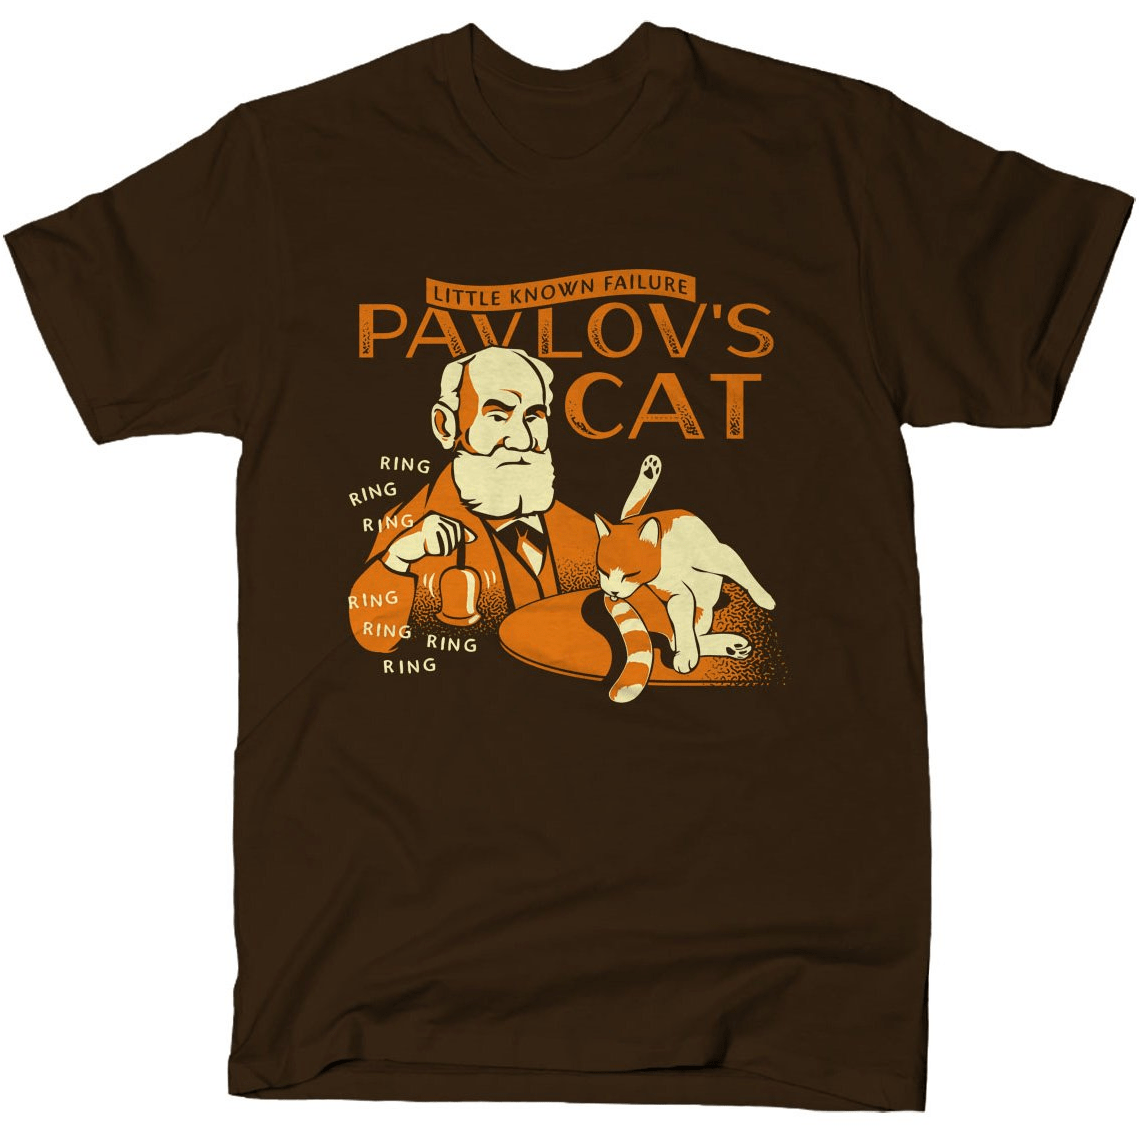 Pavlov's Cat shirt Snorgtees Clothing/Accessories